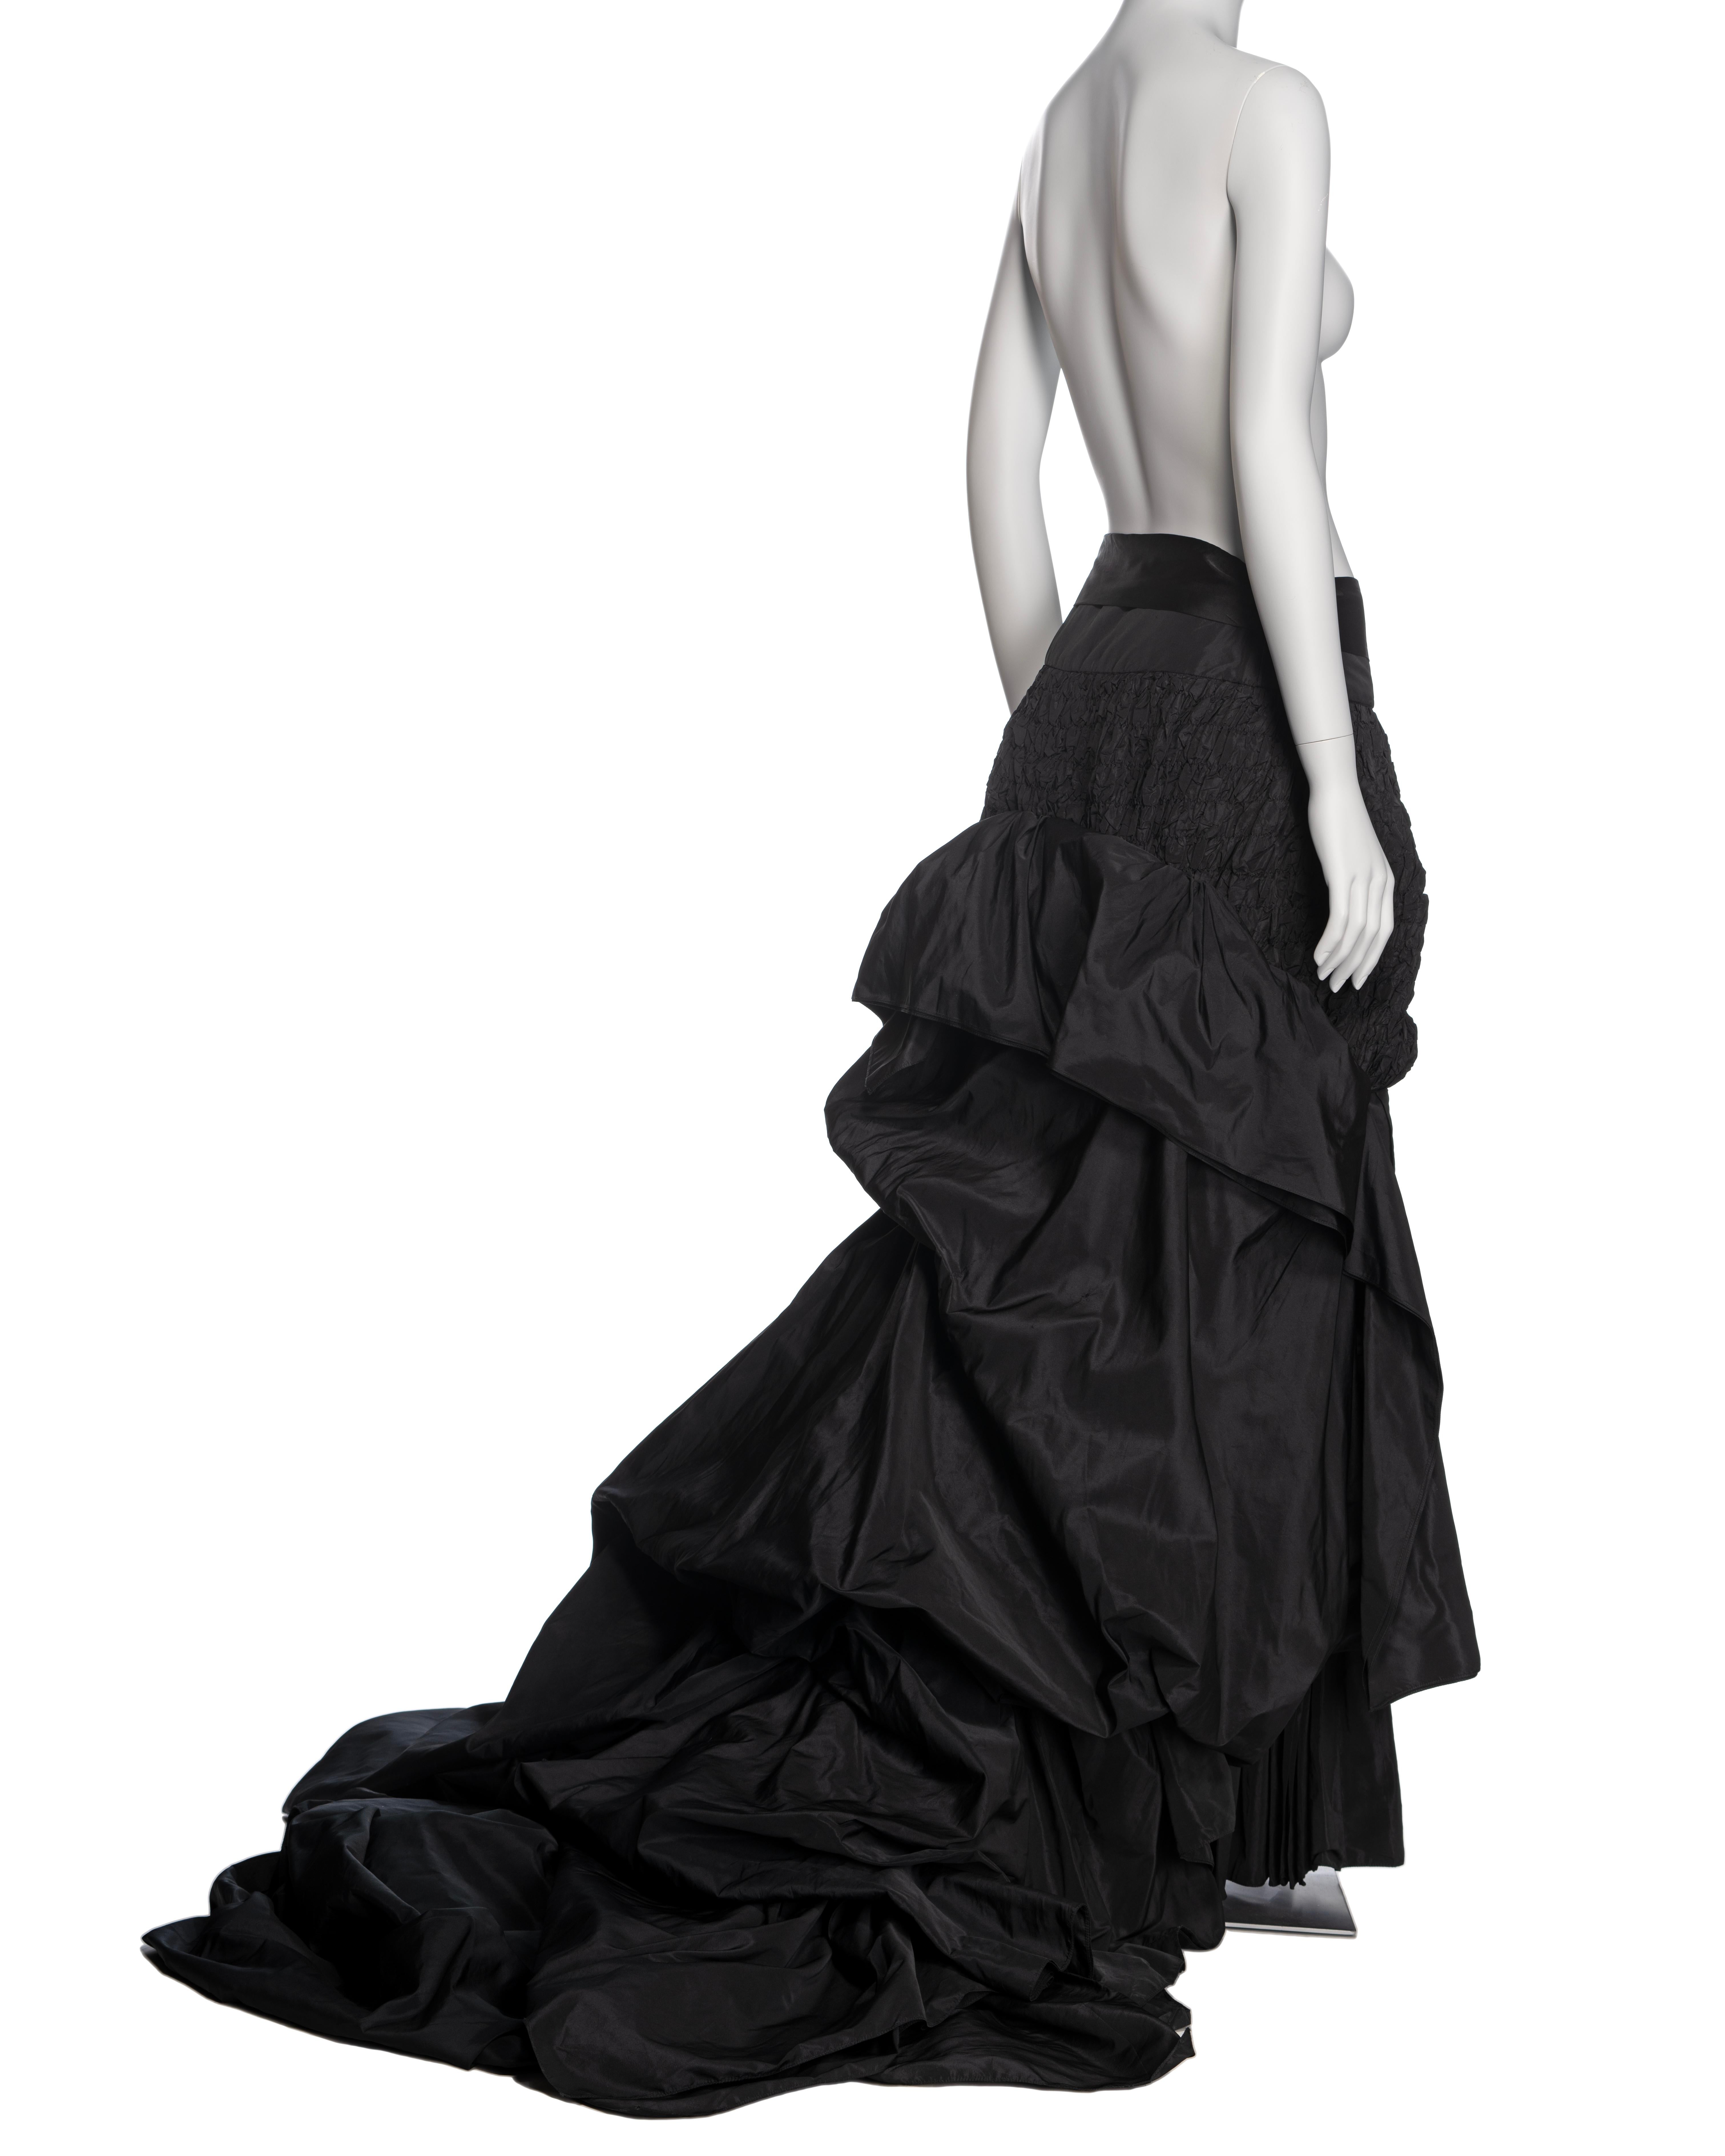 Yves Saint Laurent by Tom Ford Black Silk Taffeta Trained Evening Skirt, FW 2001 For Sale 9